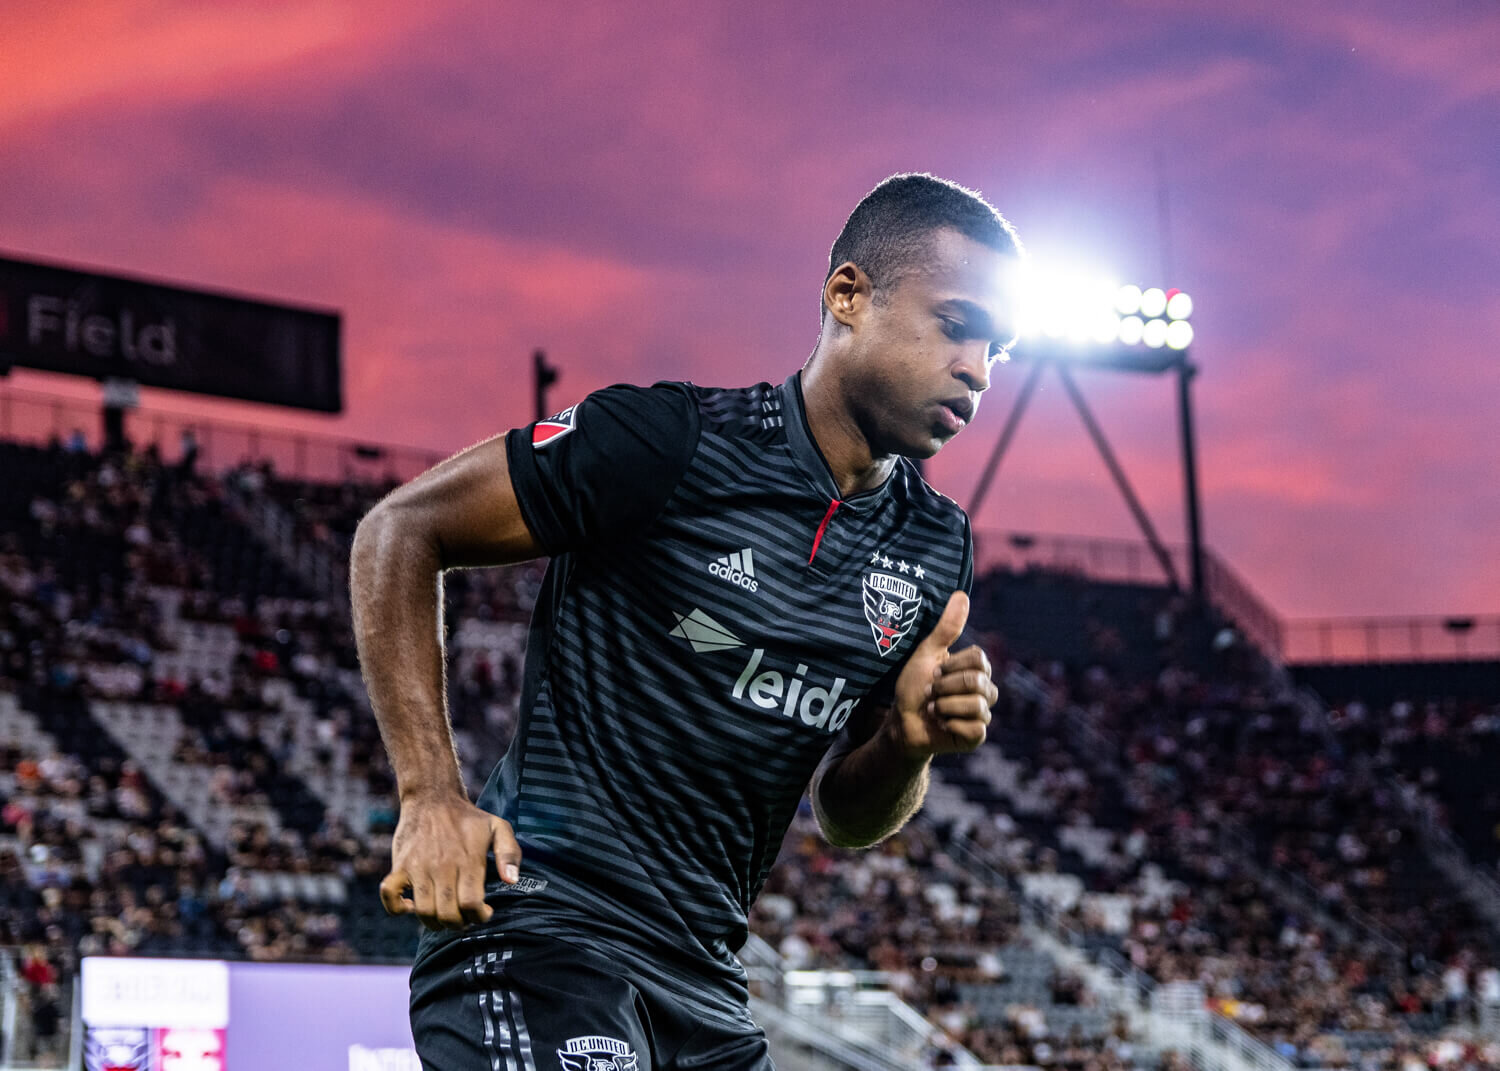 Ola-Kamara-Sunset-Audi-Field-DC-United-MLS-2019-Soccer-Washington-crvnka-Photography.JPG